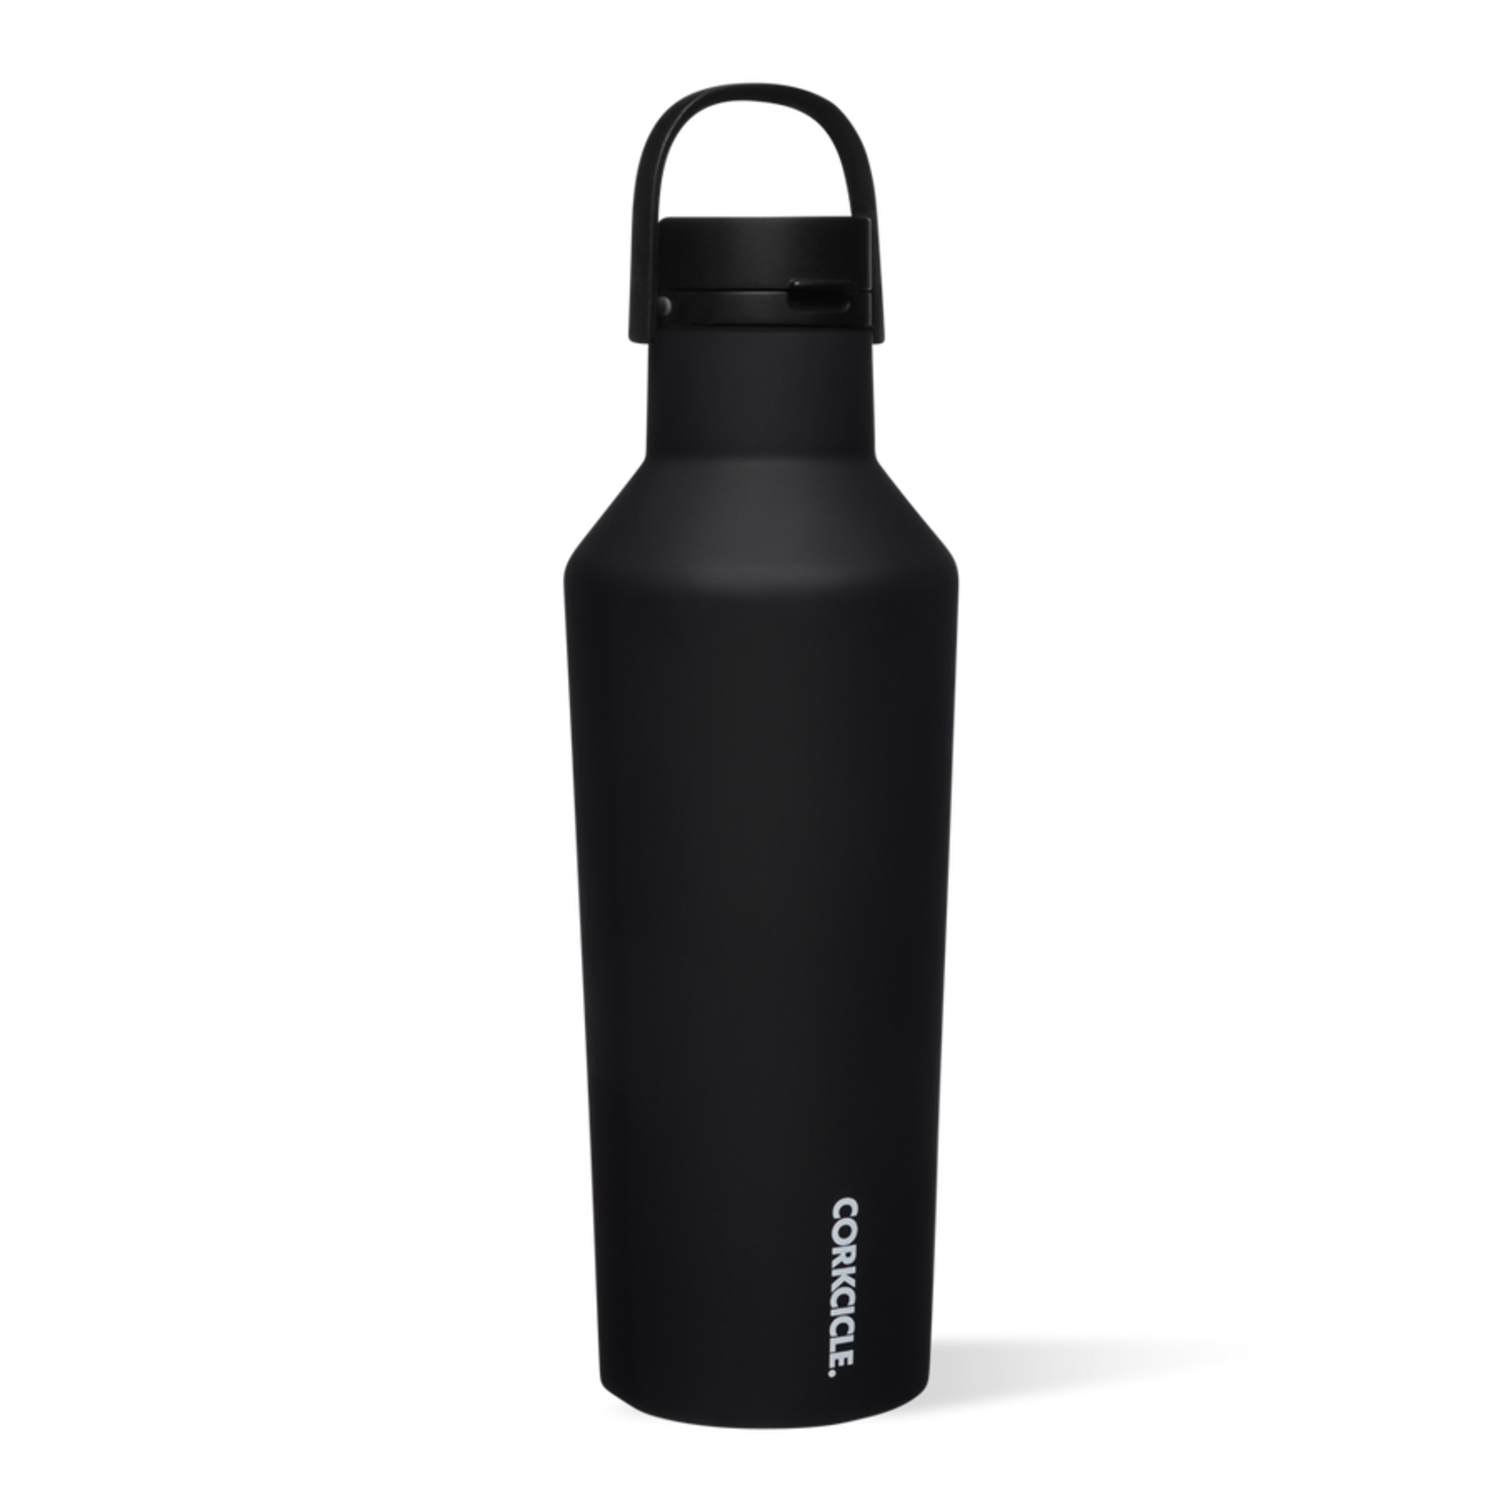 Sporty Pint Water Bottle 16oz., DW-14021 - Marco Promos